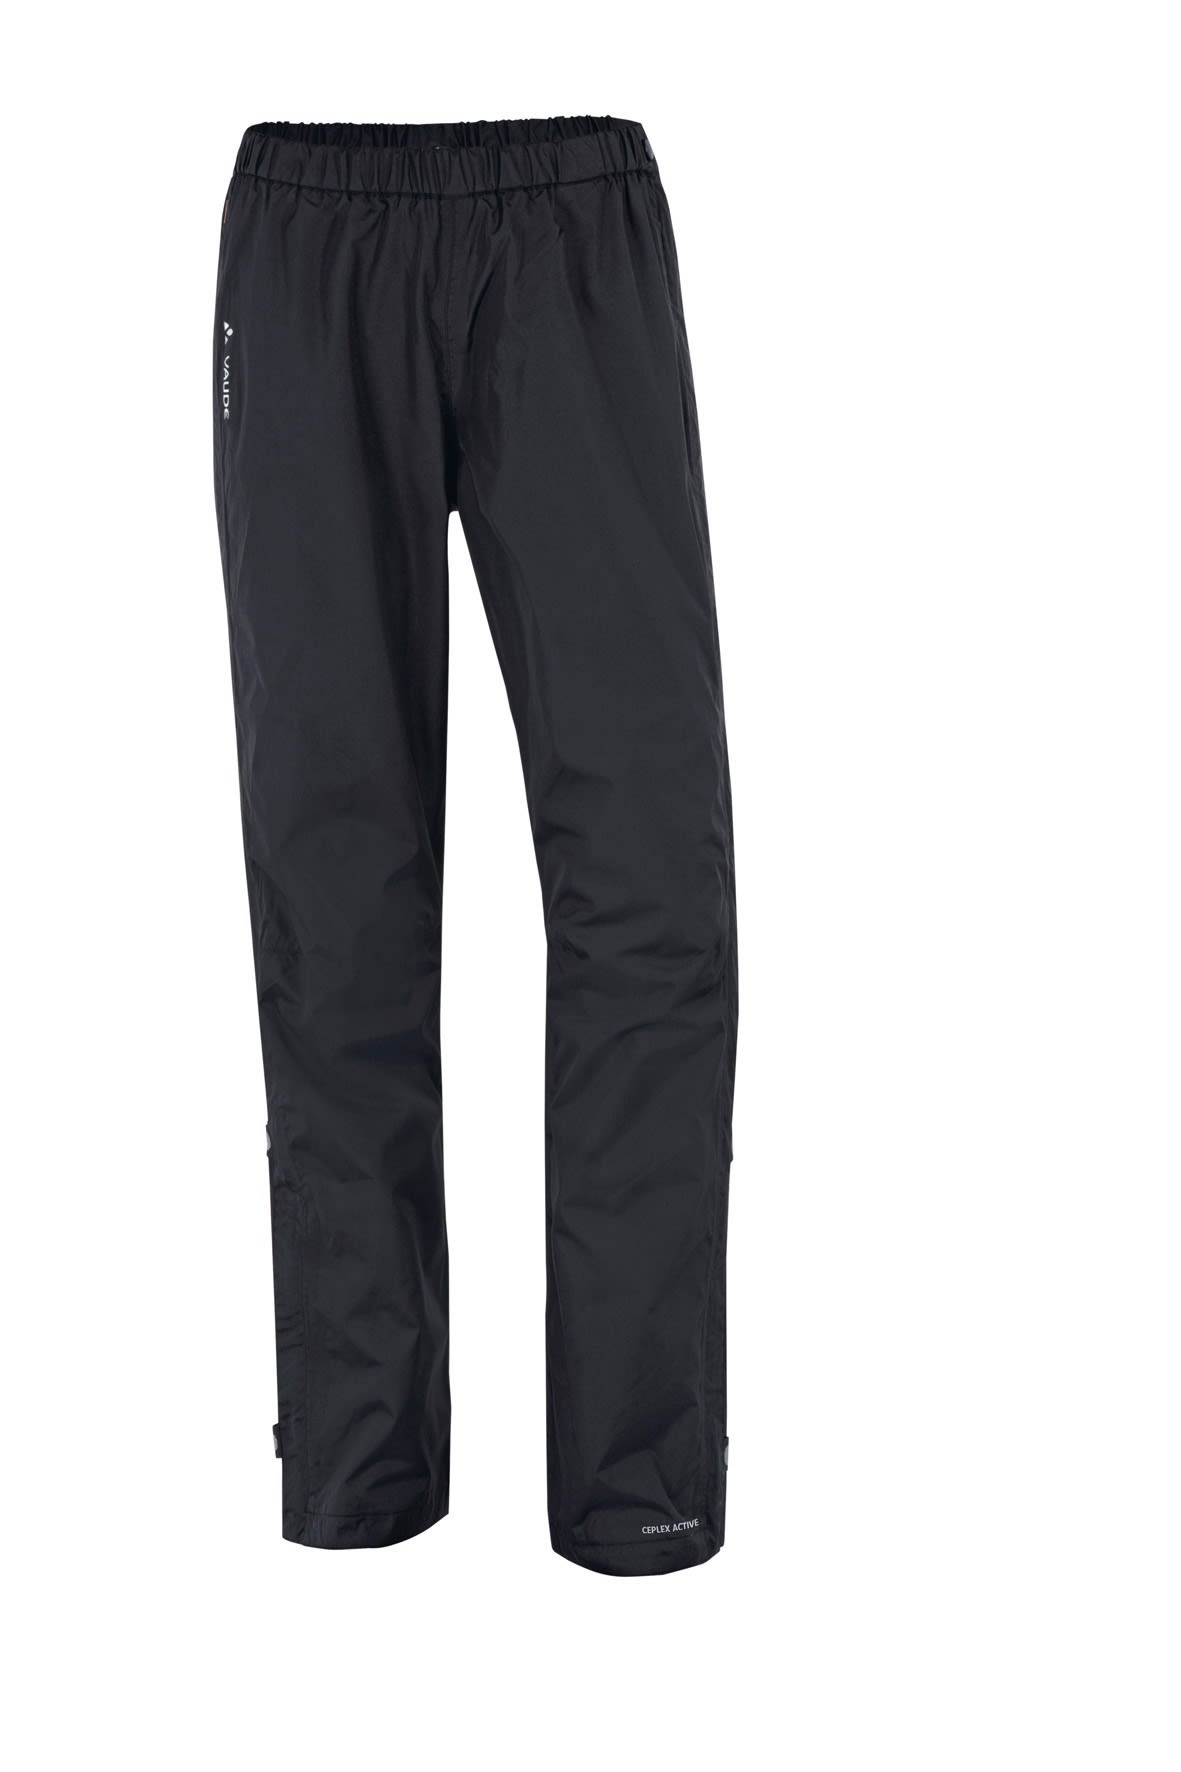 Vaude Fluid Full-Zip Pants Schwarz- Female Hosen- Grsse 40 - Short - Farbe Black unter Vaude